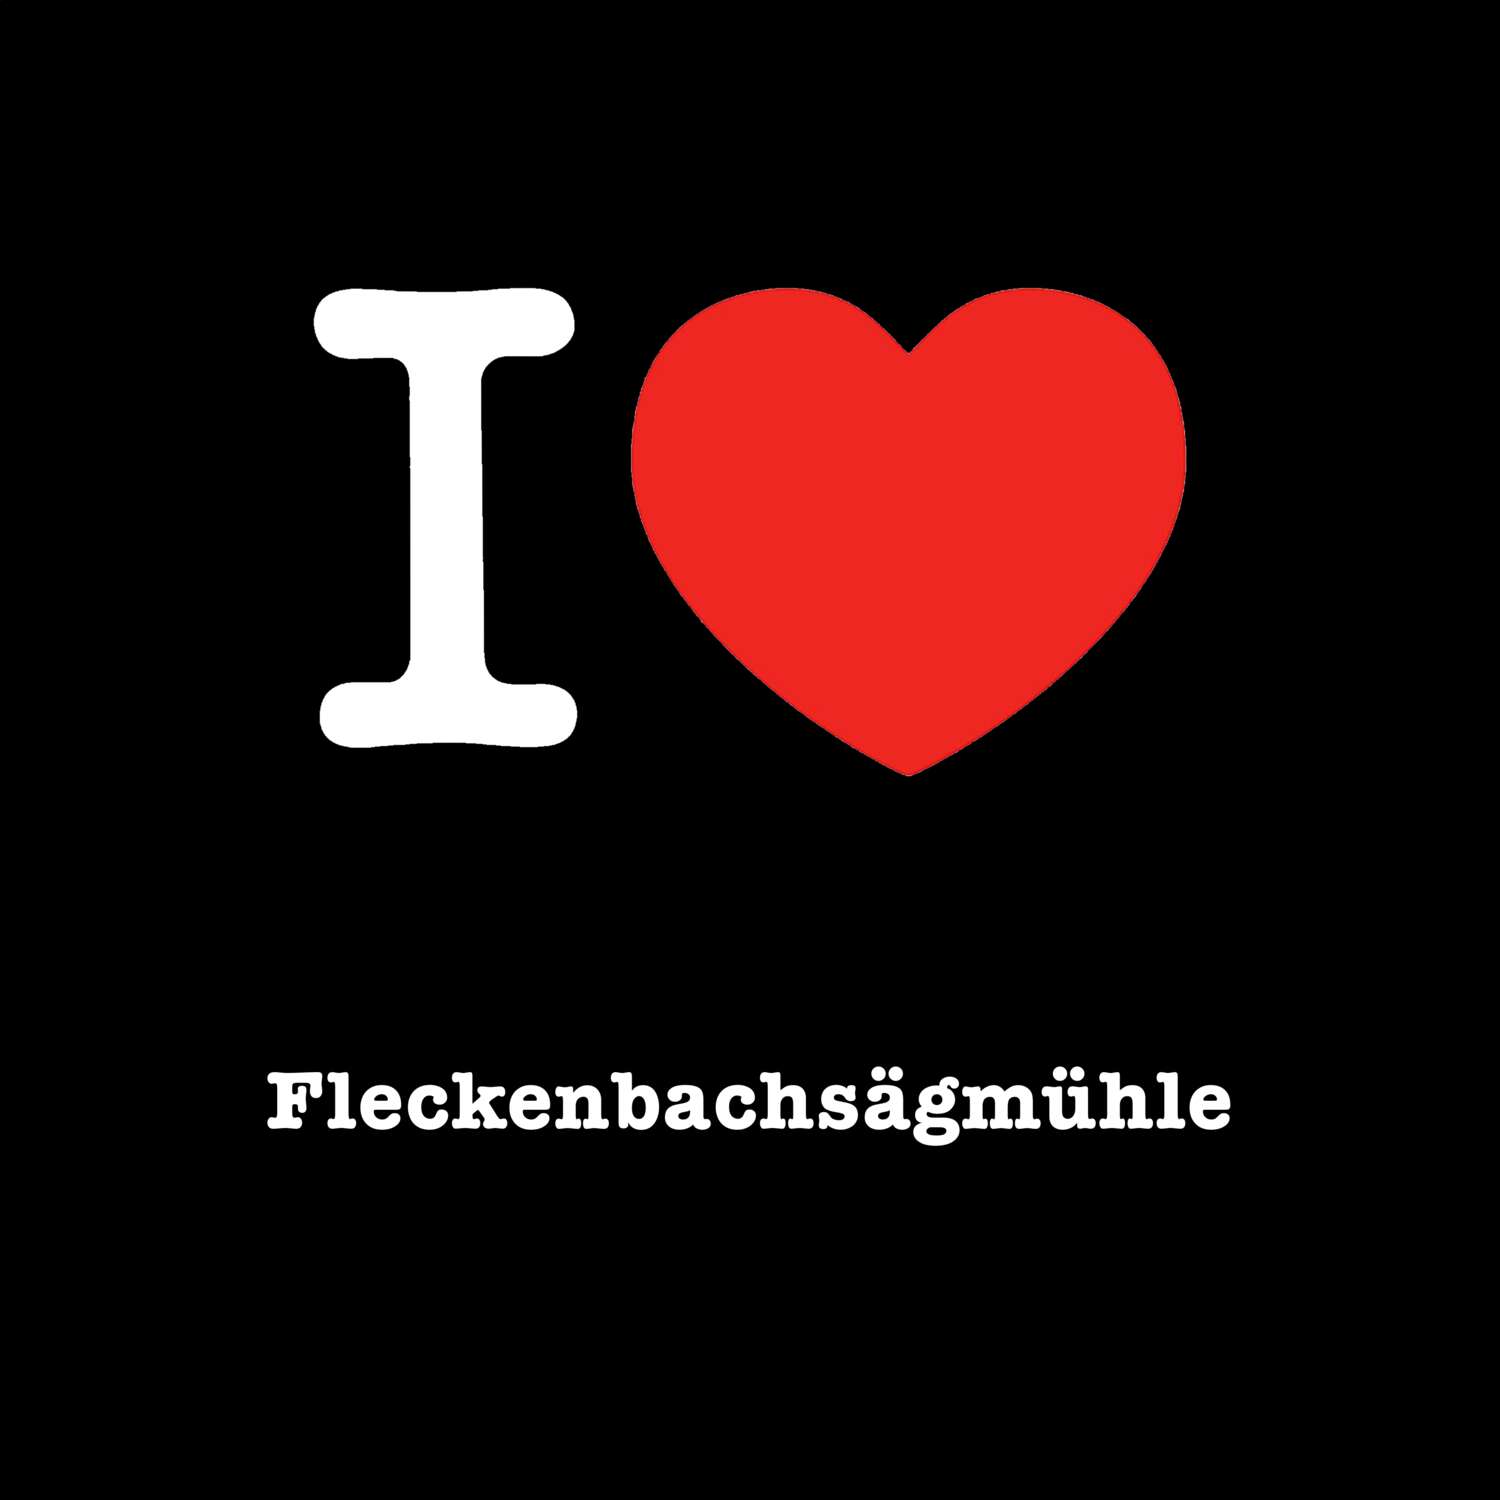 Fleckenbachsägmühle T-Shirt »I love«